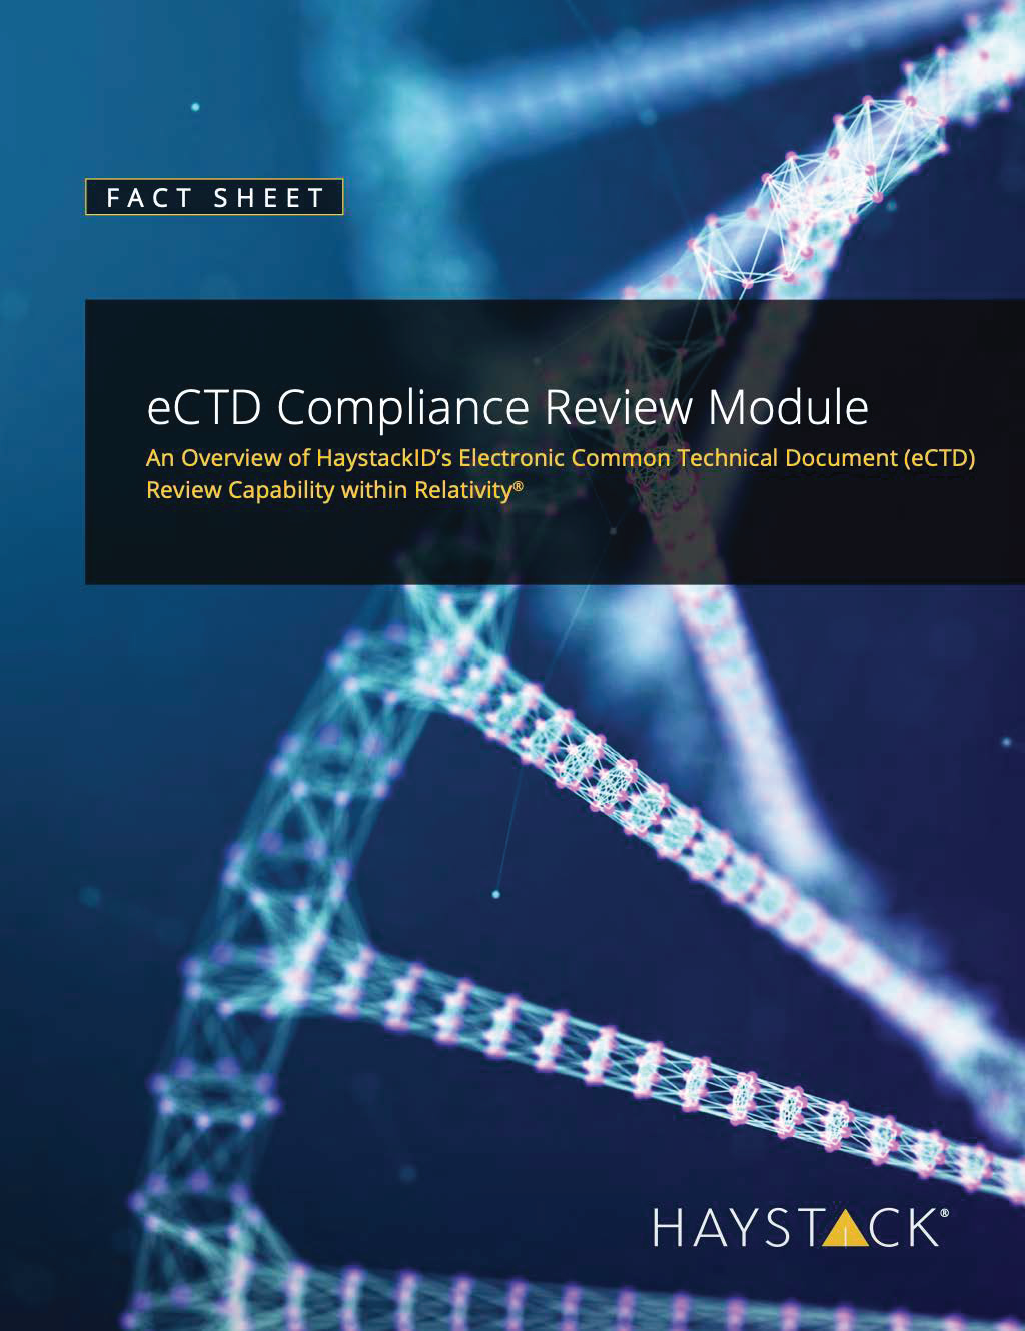 eCDT Compliance Review Module Fact Sheet Cover